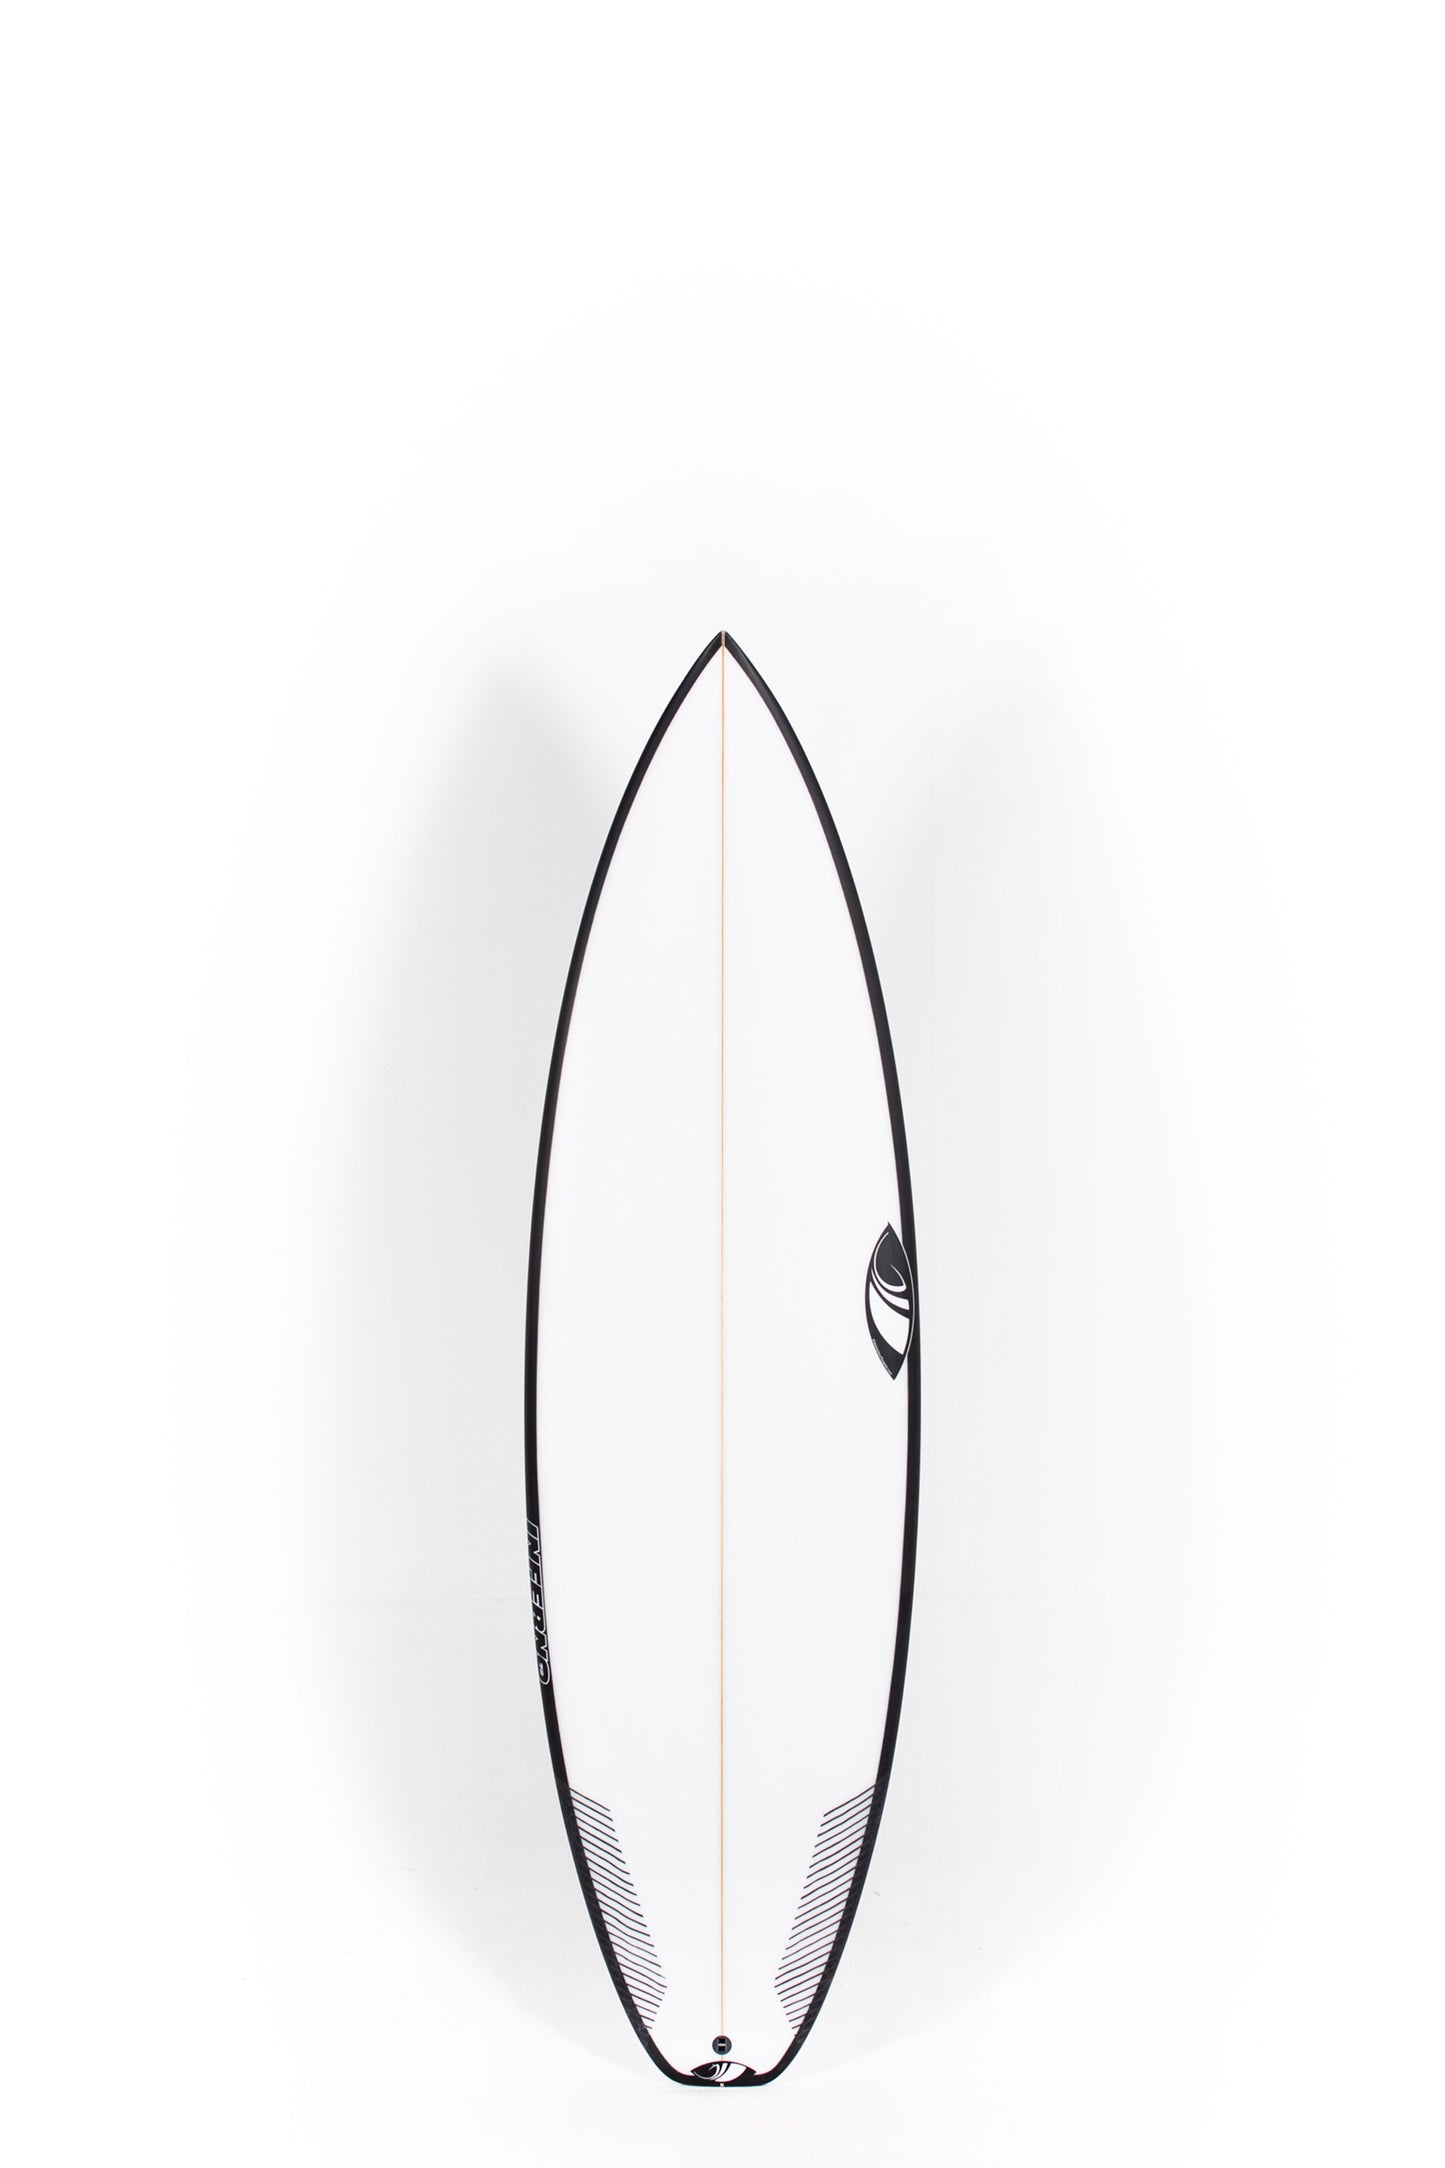 Pukas Surf Shop - Sharpeye Surfboards - INFERNO 72 by Marcio Zouvi -  6'3" x 20 1/2 x 2 11/16 - 35.2L - INFERNO